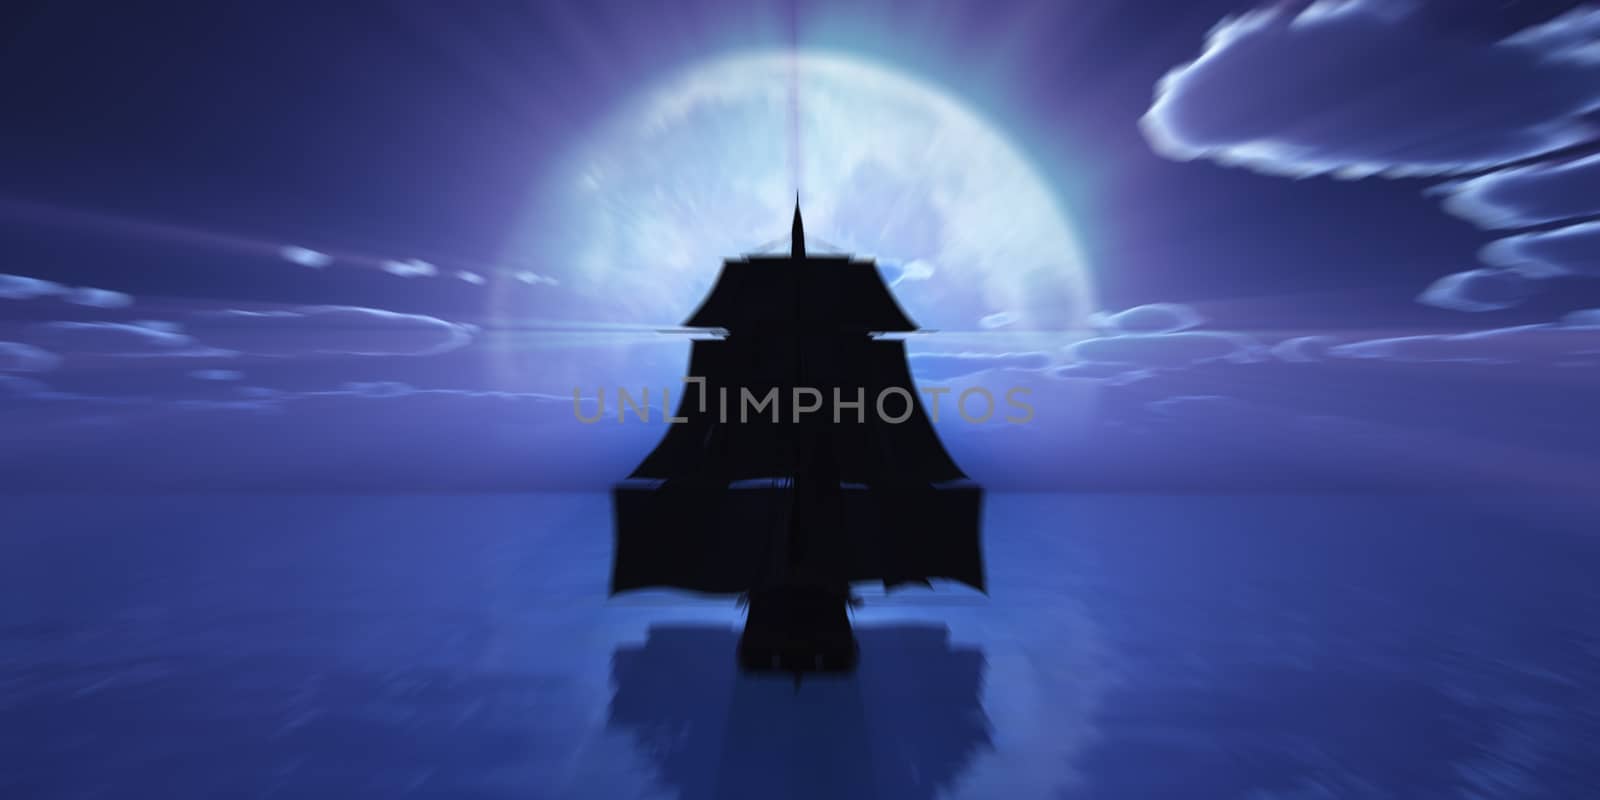 old ship at night full moon by alex_nako